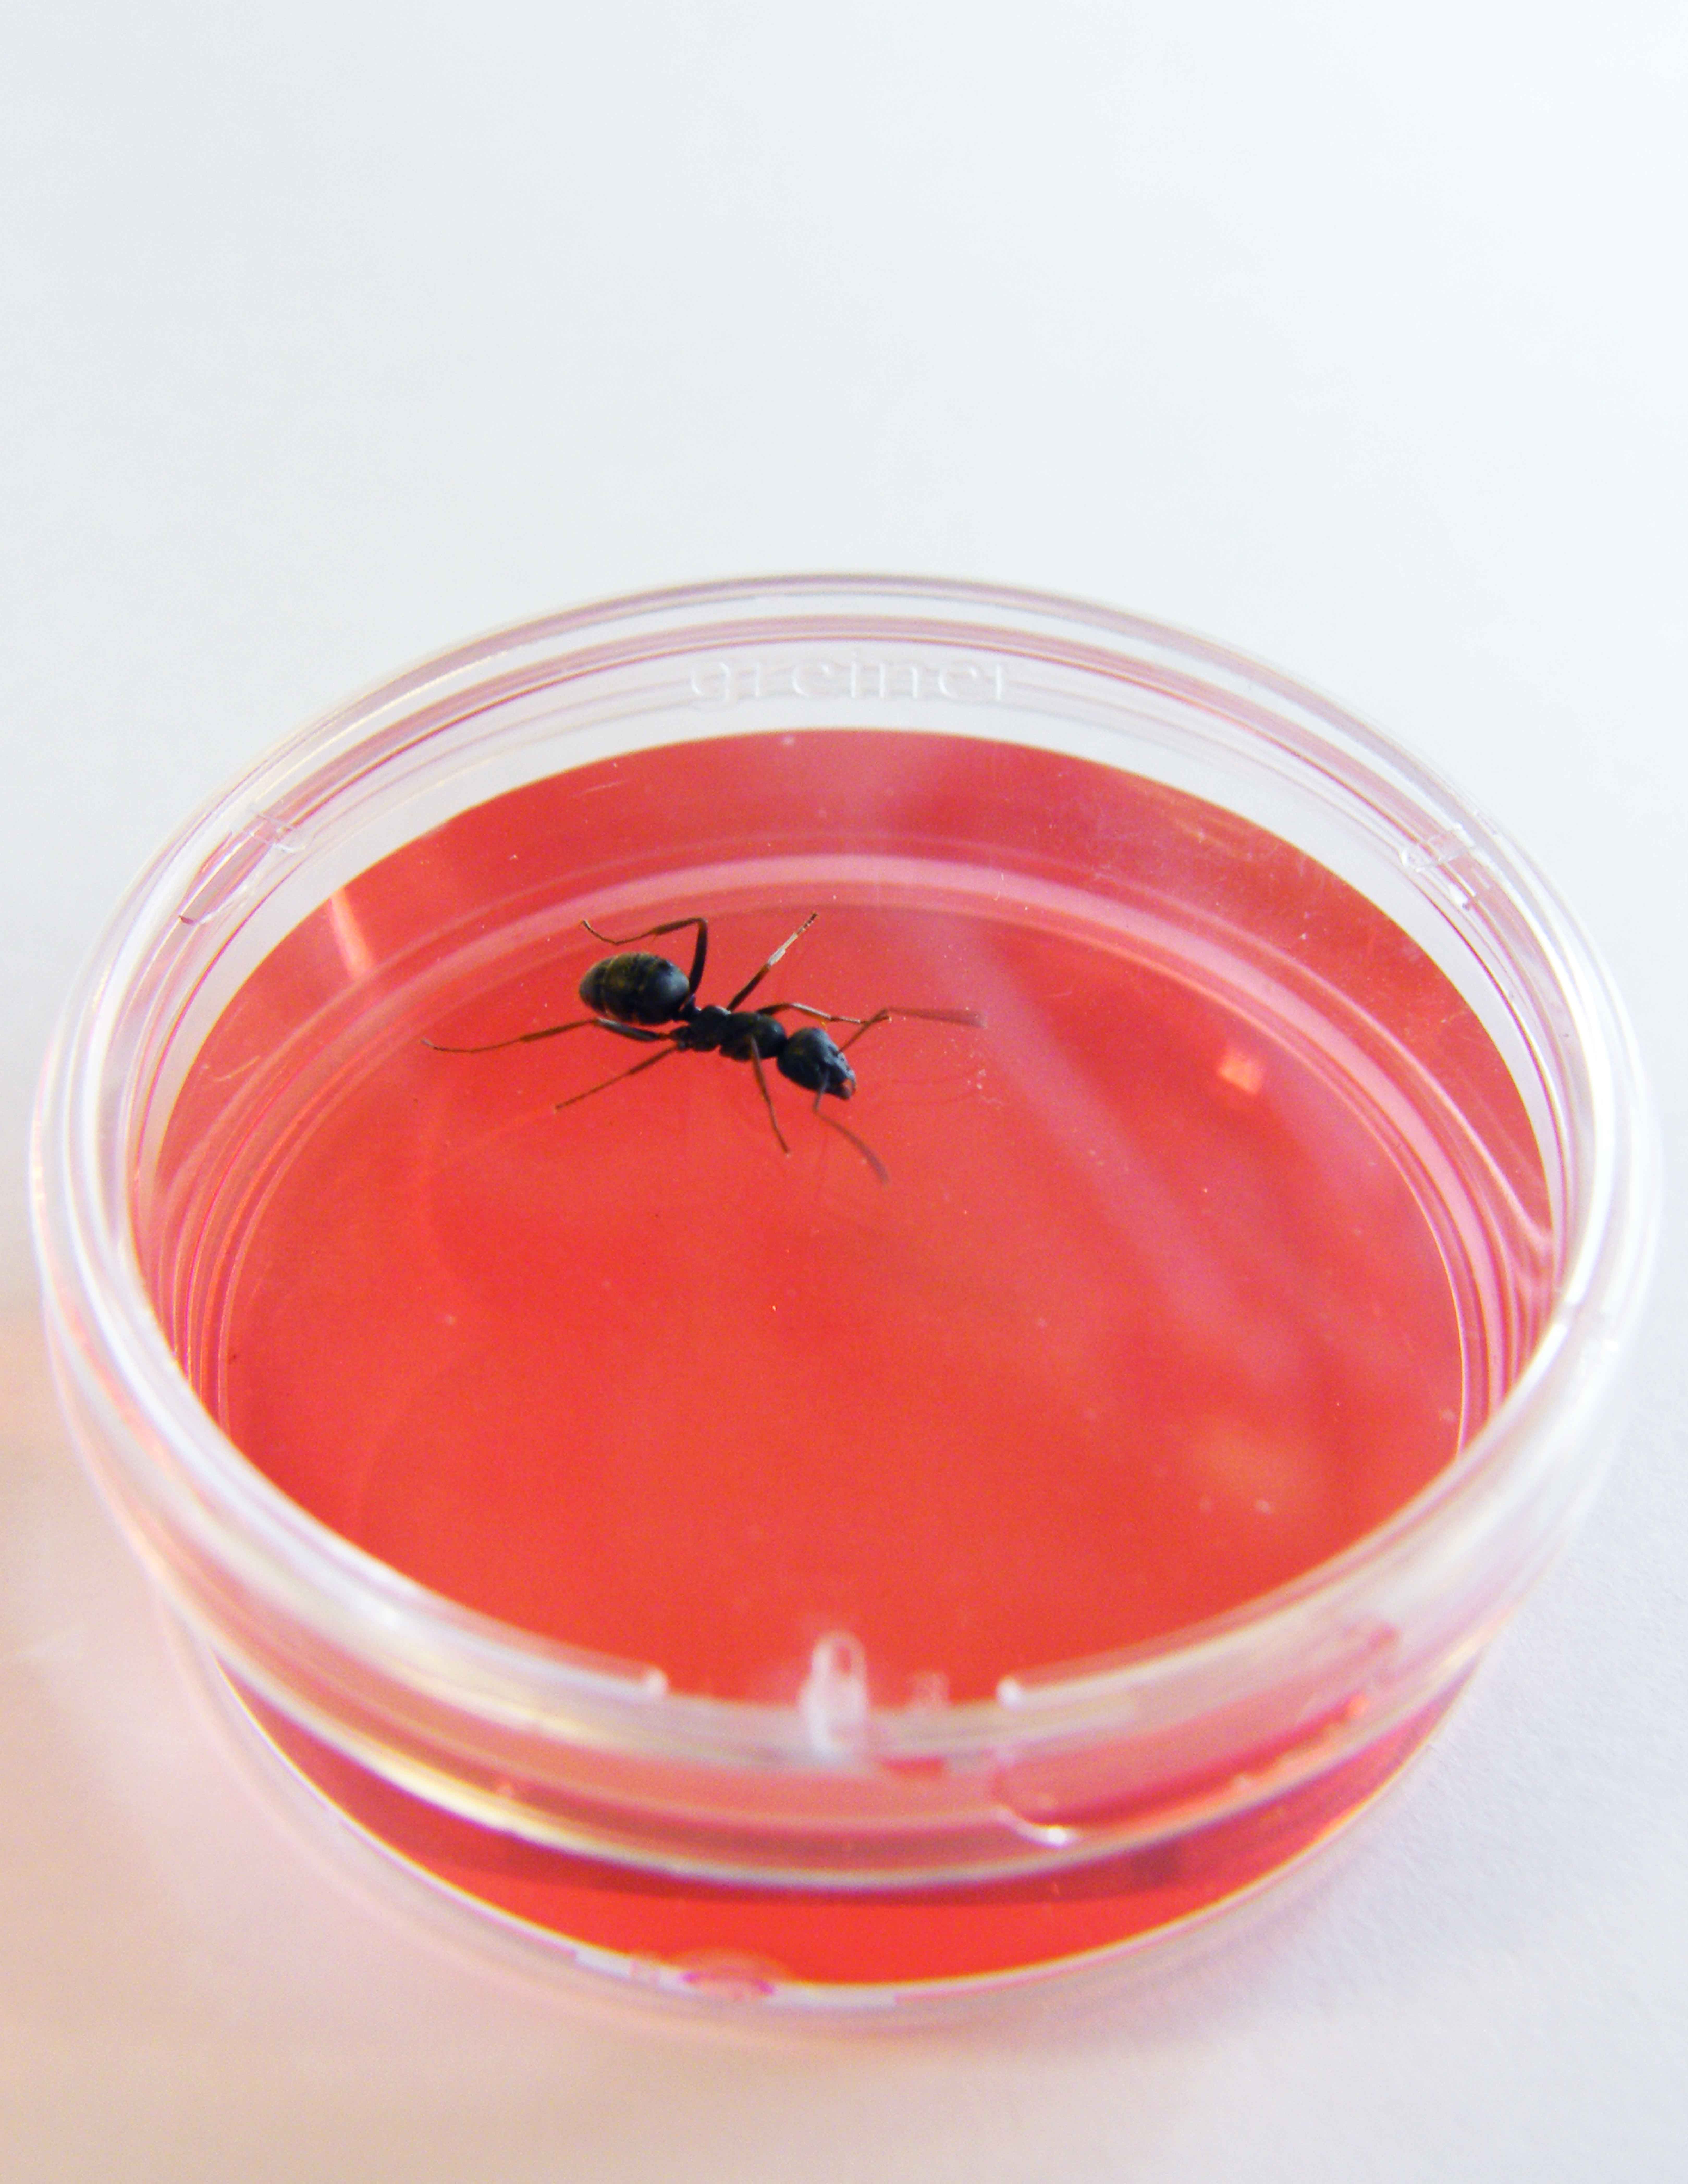 Какой запах рака. Муравей Ant. Муравьи обнаружат рак!. Три муравья. Муравьи находят раковые клетки.